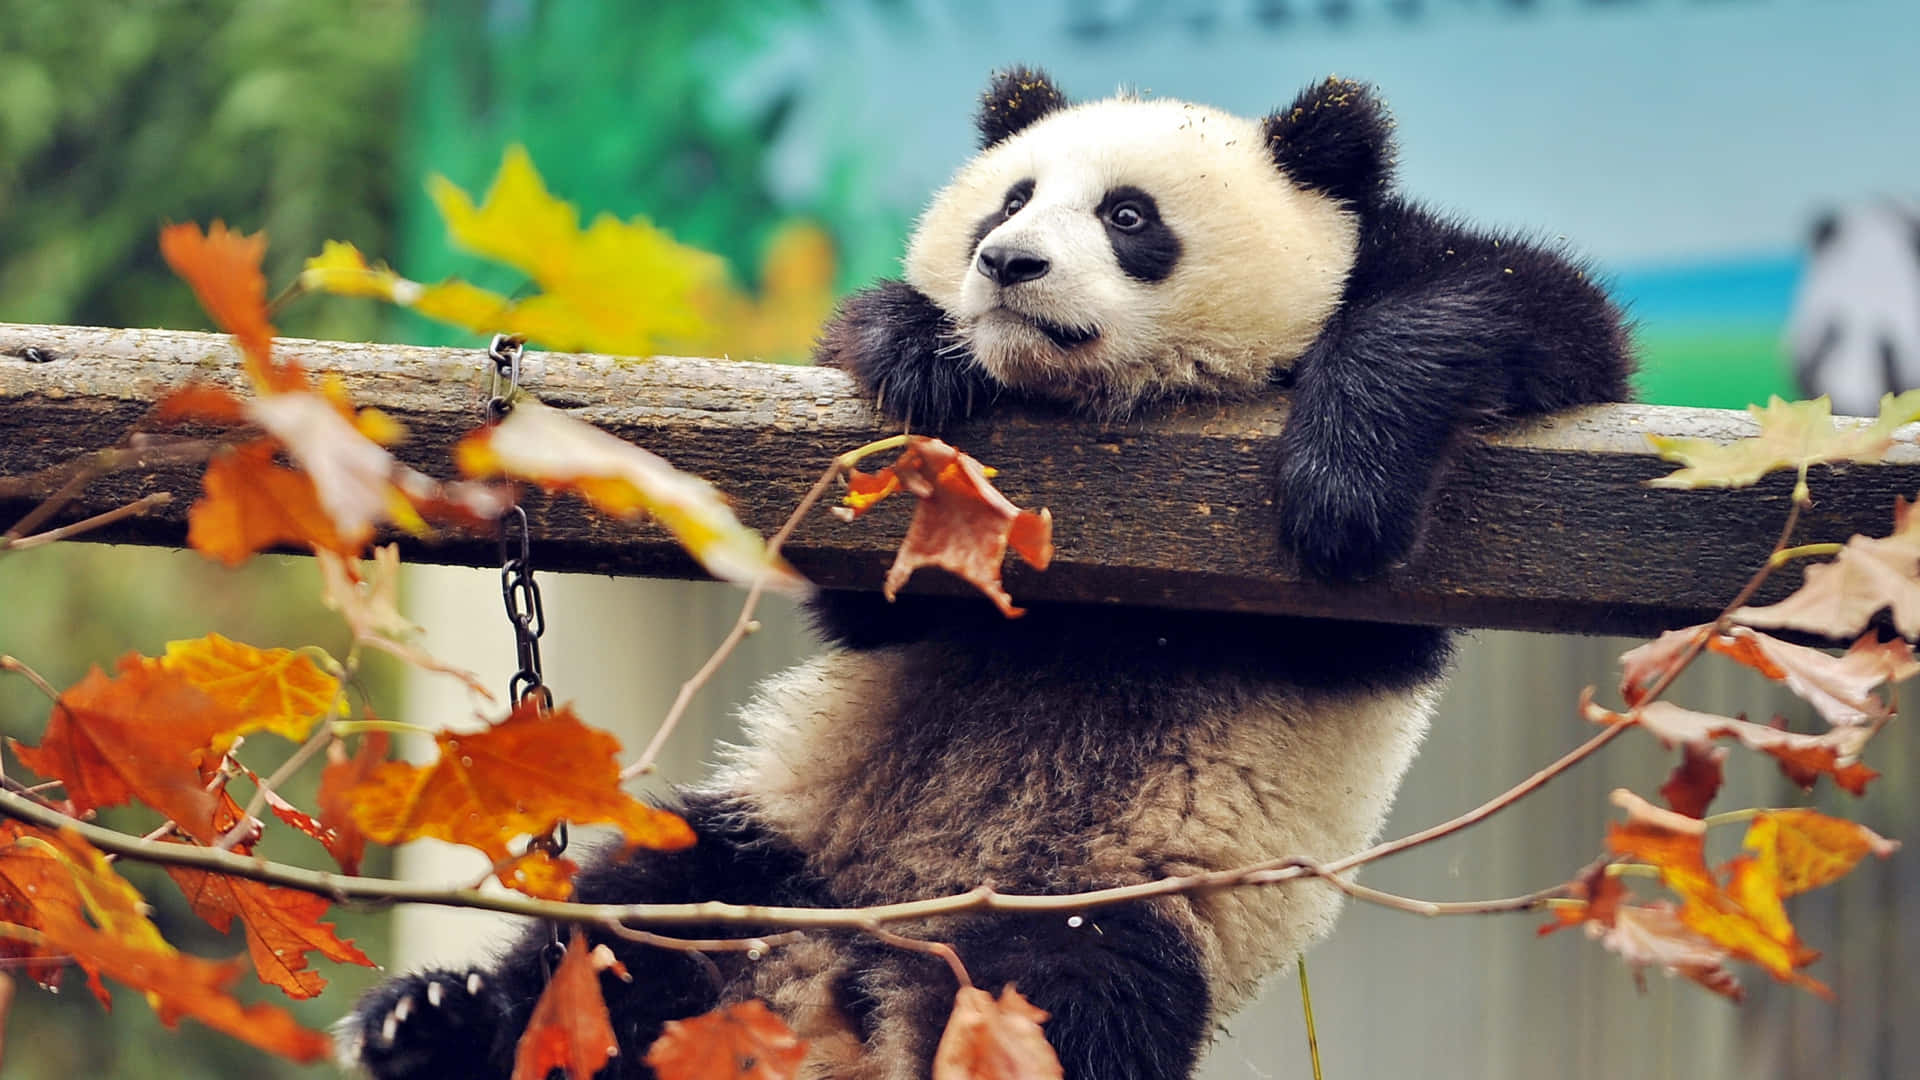 Adorable Panda Eating Bamboo